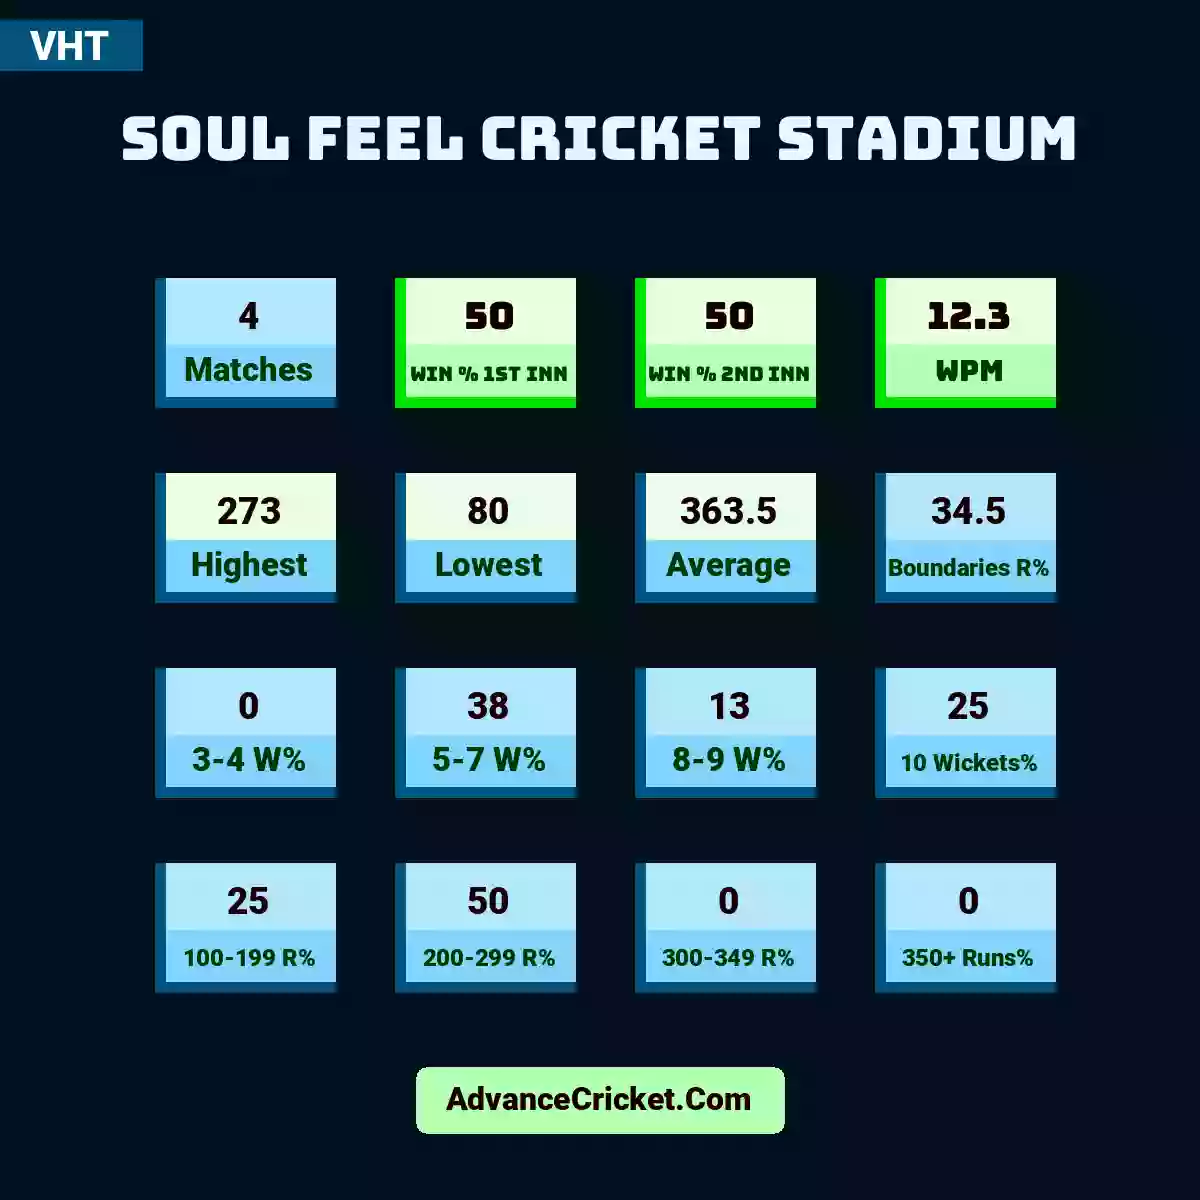 Image showing Soul Feel Cricket Stadium with Matches: 4, Win % 1st Inn: 50, Win % 2nd Inn: 50, WPM: 12.3, Highest: 273, Lowest: 80, Average: 363.5, Boundaries R%: 34.5, 3-4 W%: 0, 5-7 W%: 38, 8-9 W%: 13, 10 Wickets%: 25, 100-199 R%: 25, 200-299 R%: 50, 300-349 R%: 0, 350+ Runs%: 0.